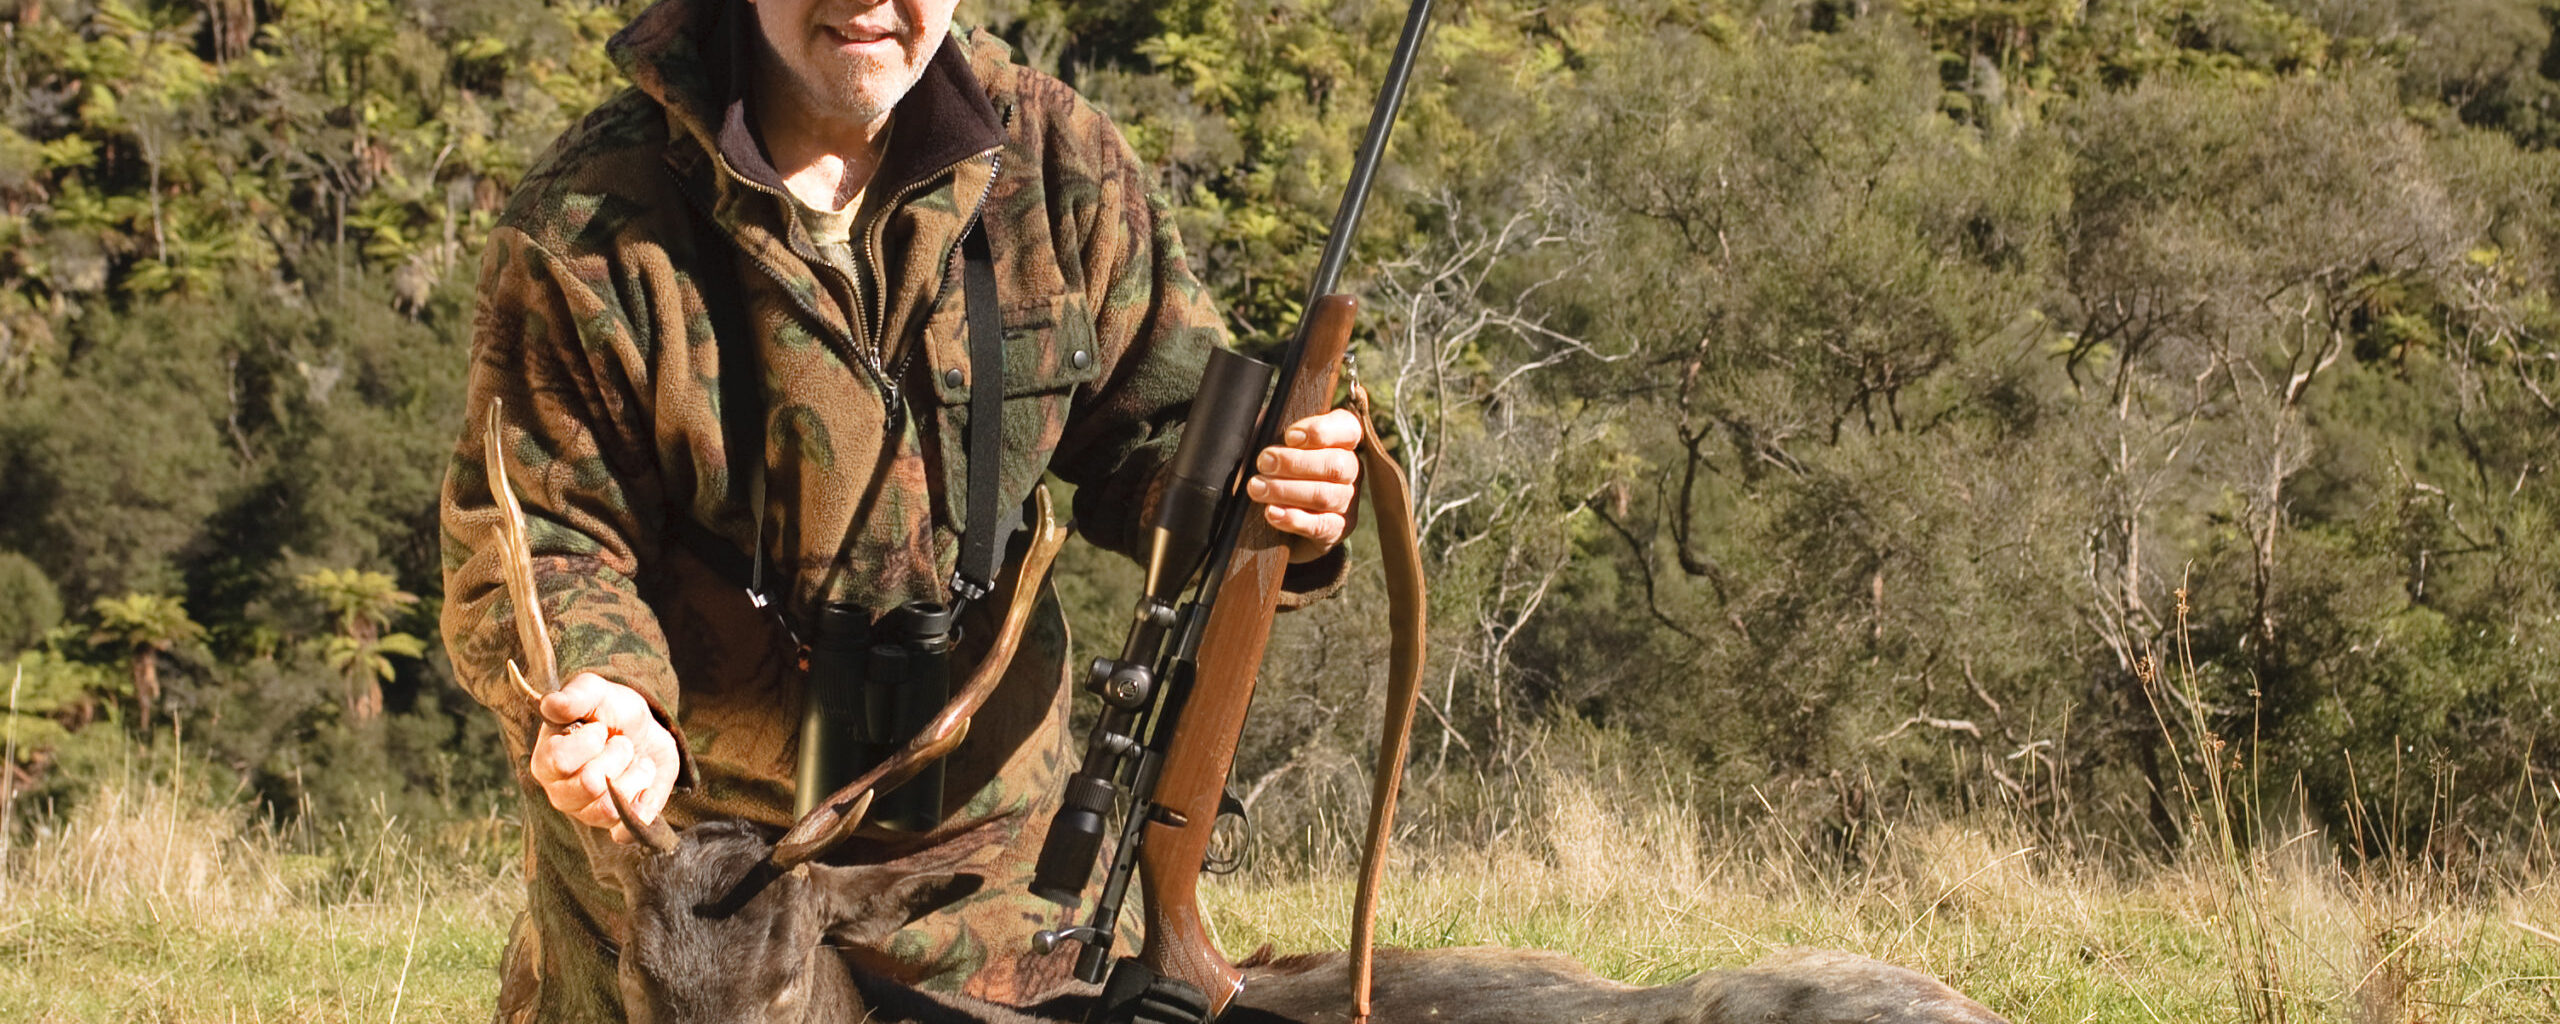 Top 3 Rifles for Deer Hunting in 2019